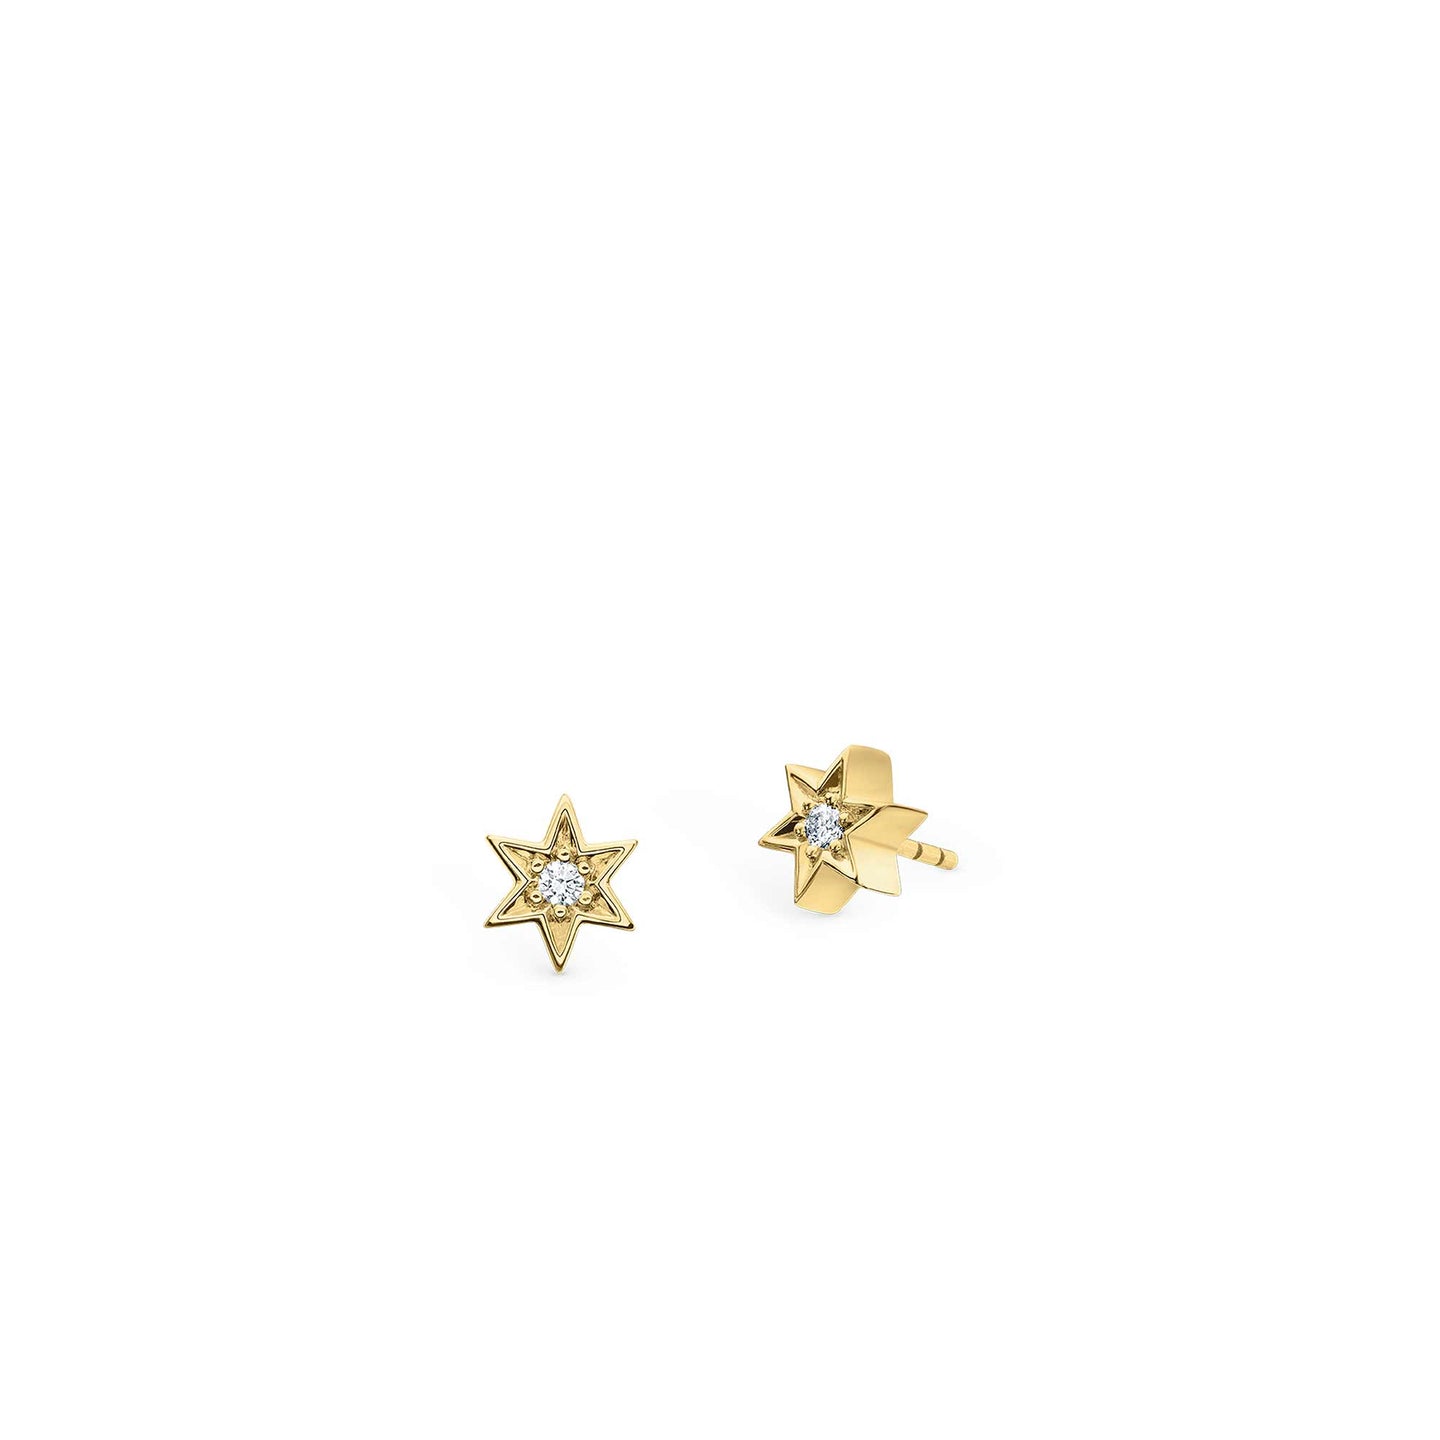 Cosmic Stargazer Earrings in 18ct Yellow Gold with Diamonds